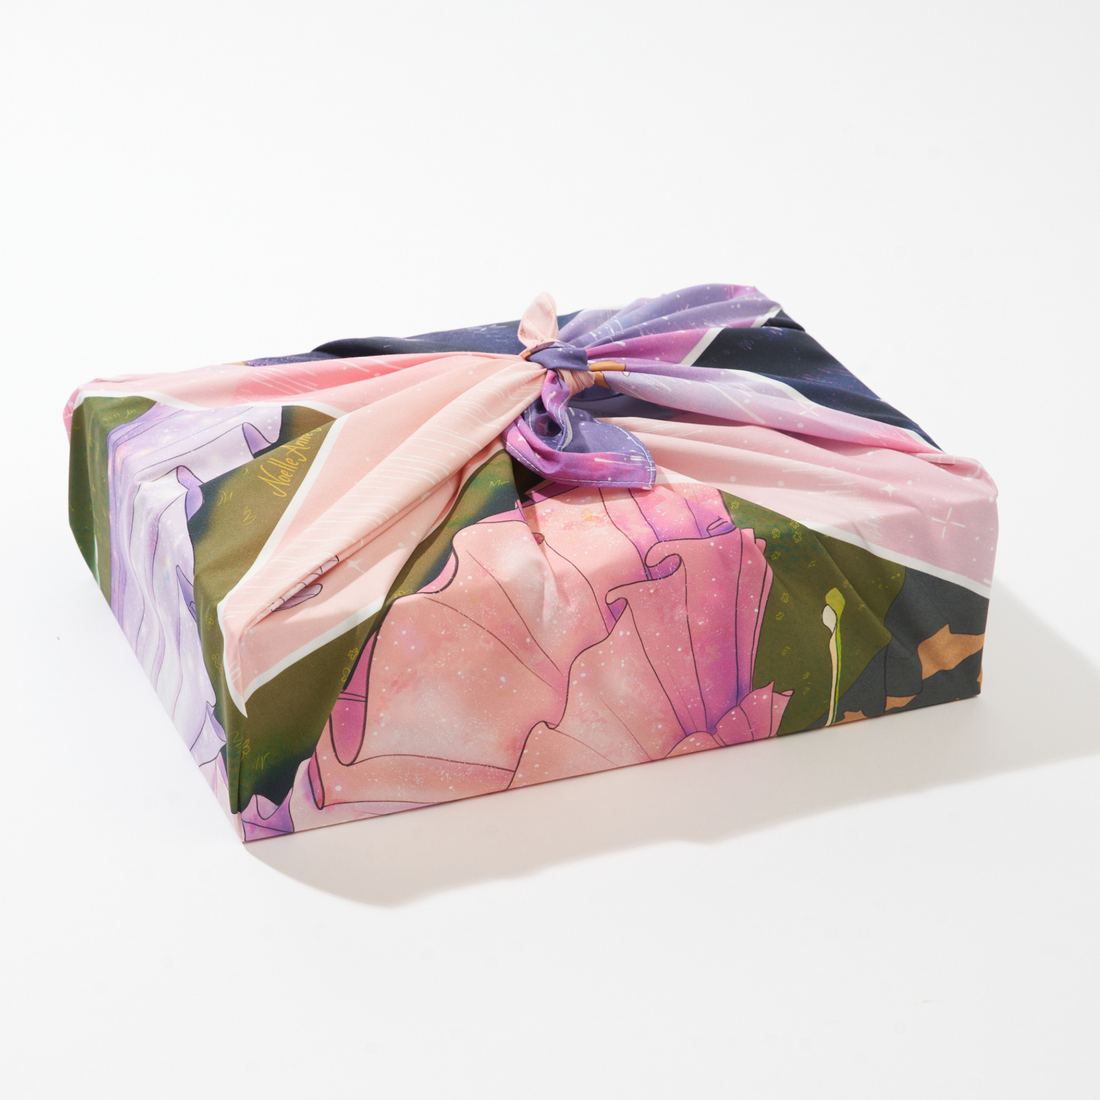 Spirit | 28" Furoshiki Gift Wrap by Noelle Anne Navarrete